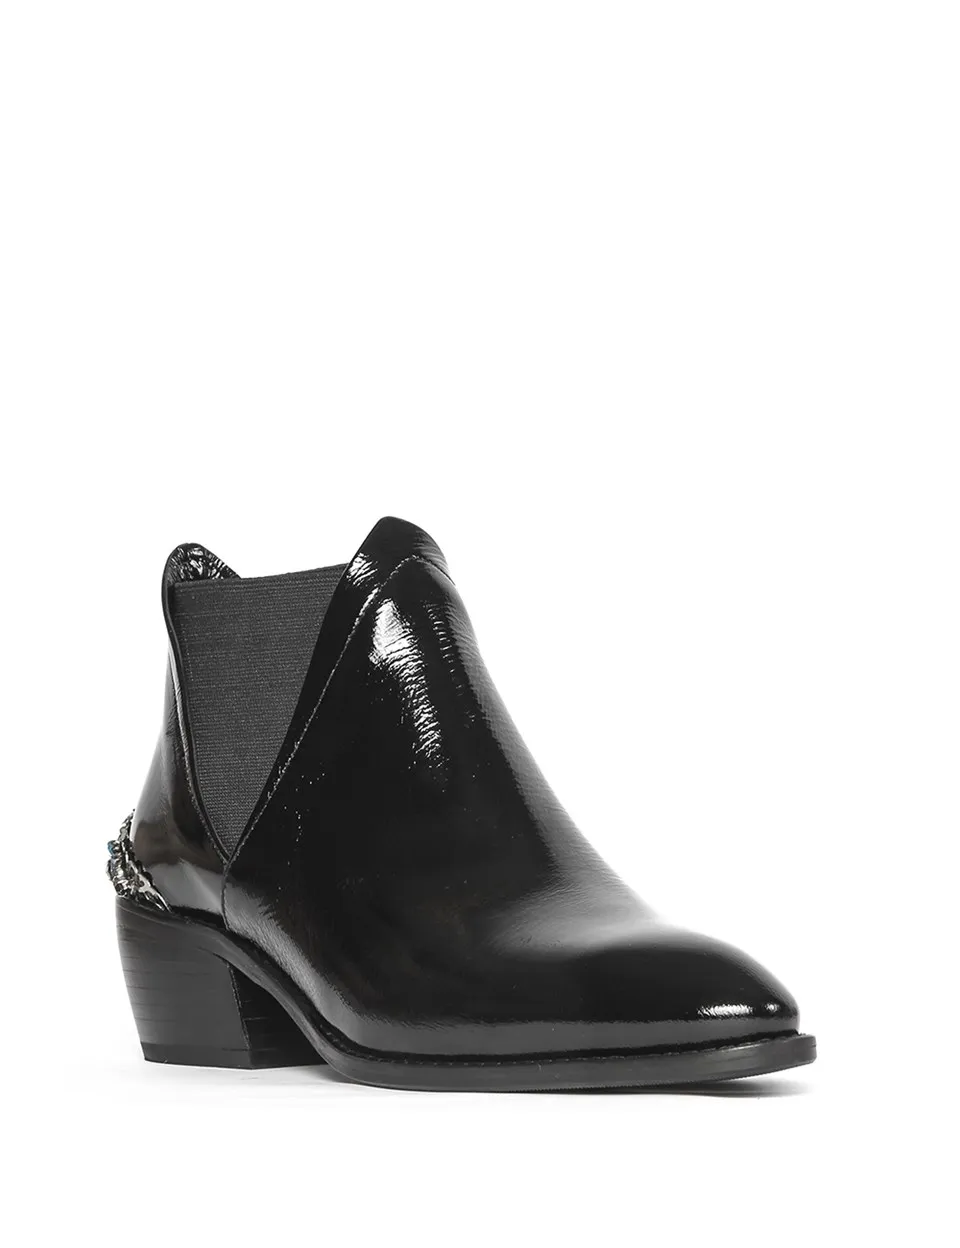 

İLVİ Henrike Women's Heeled Boot Black Patent Leather